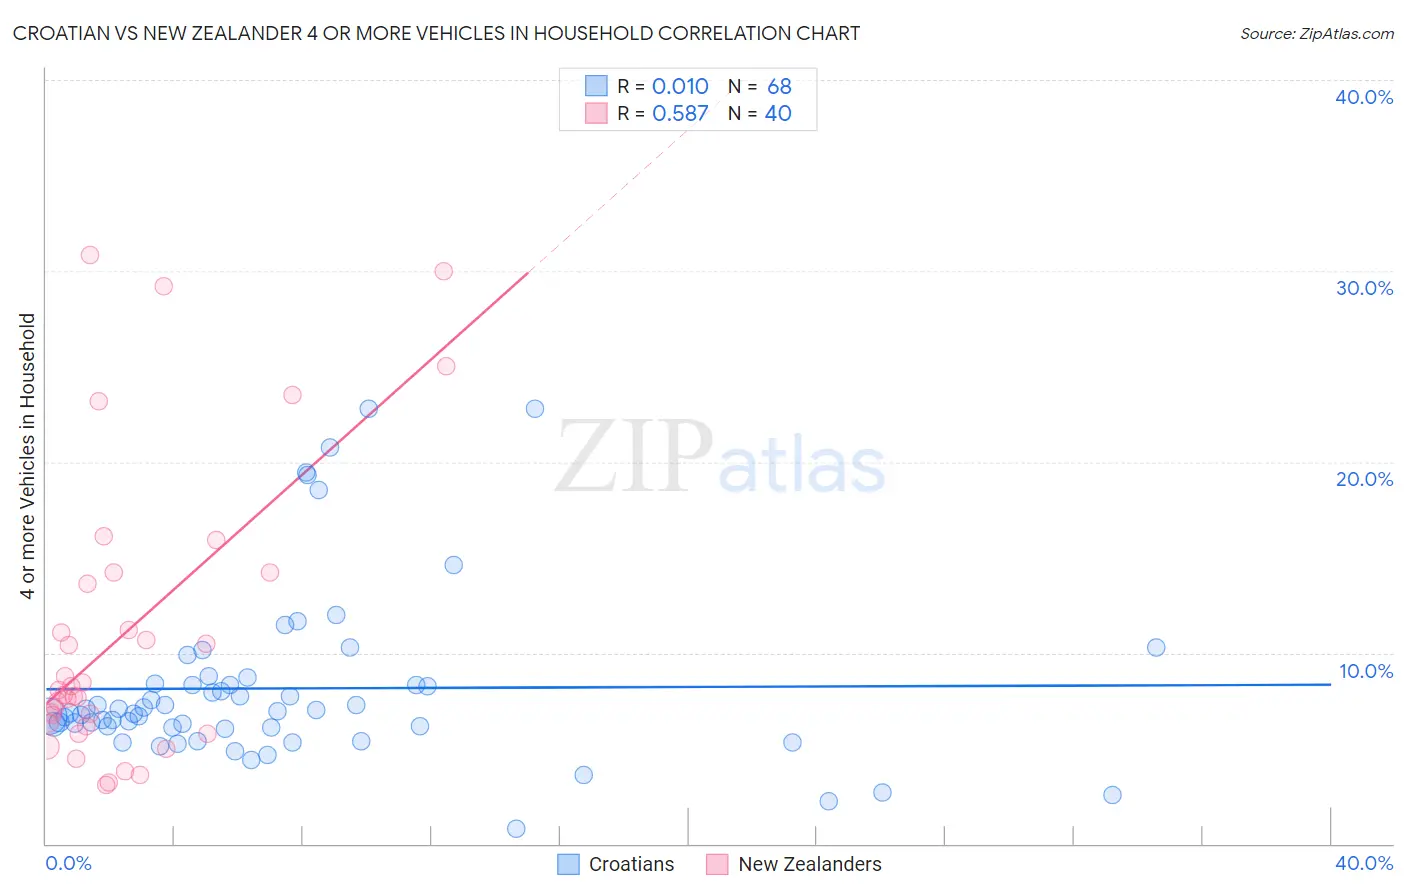 Croatian vs New Zealander 4 or more Vehicles in Household